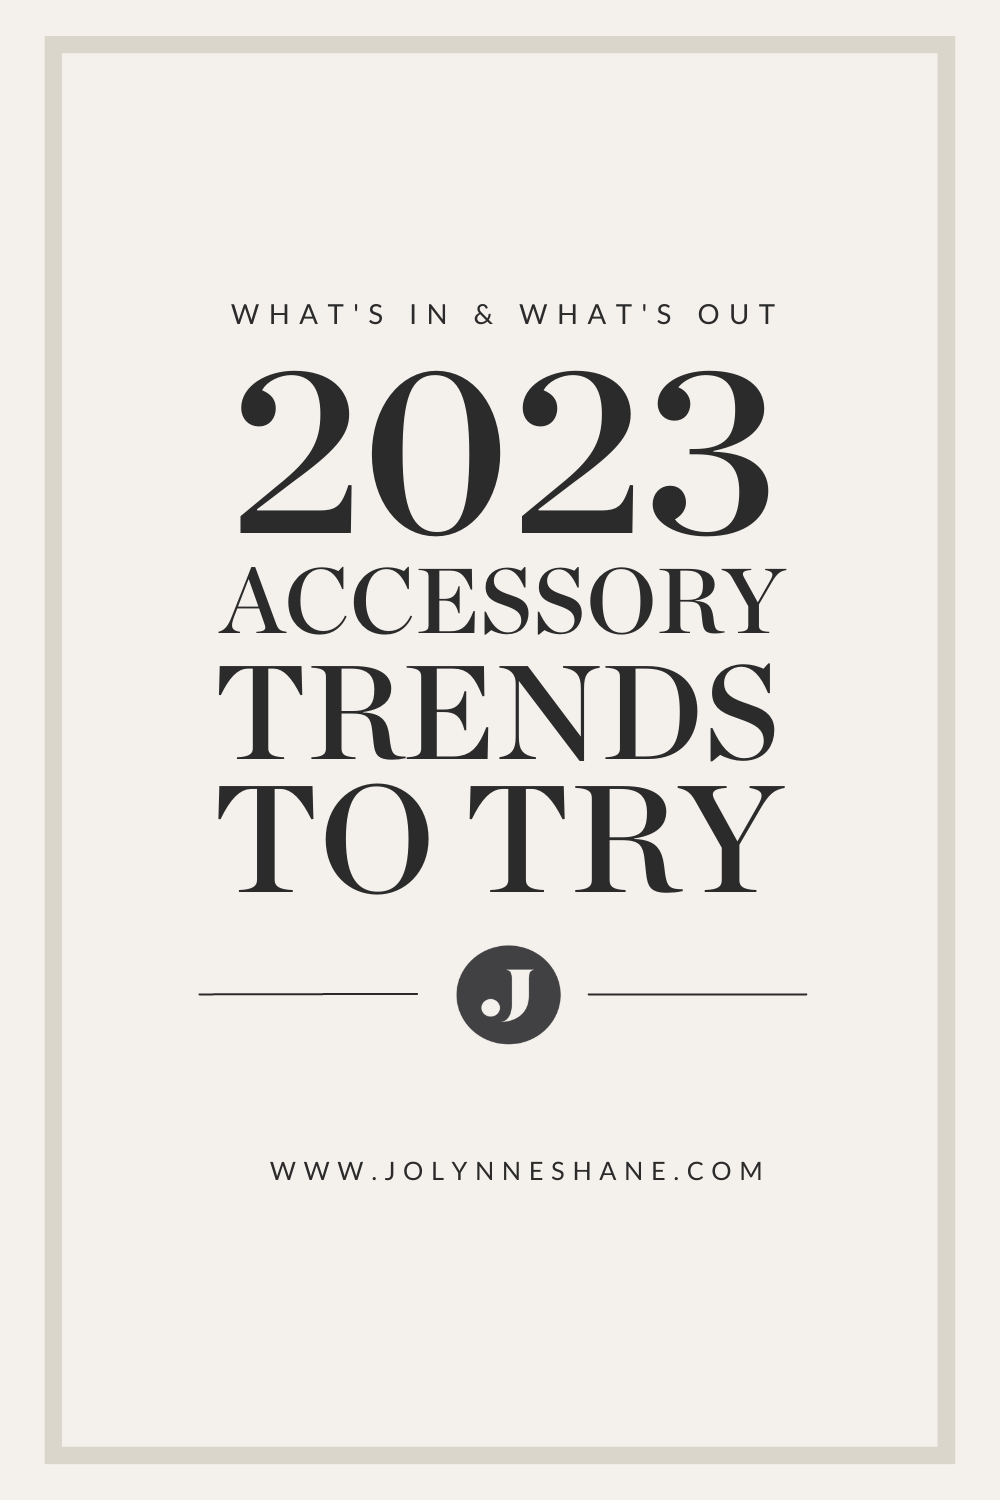 The Top 5 Handbag & Accessory Trends for Spring 2023